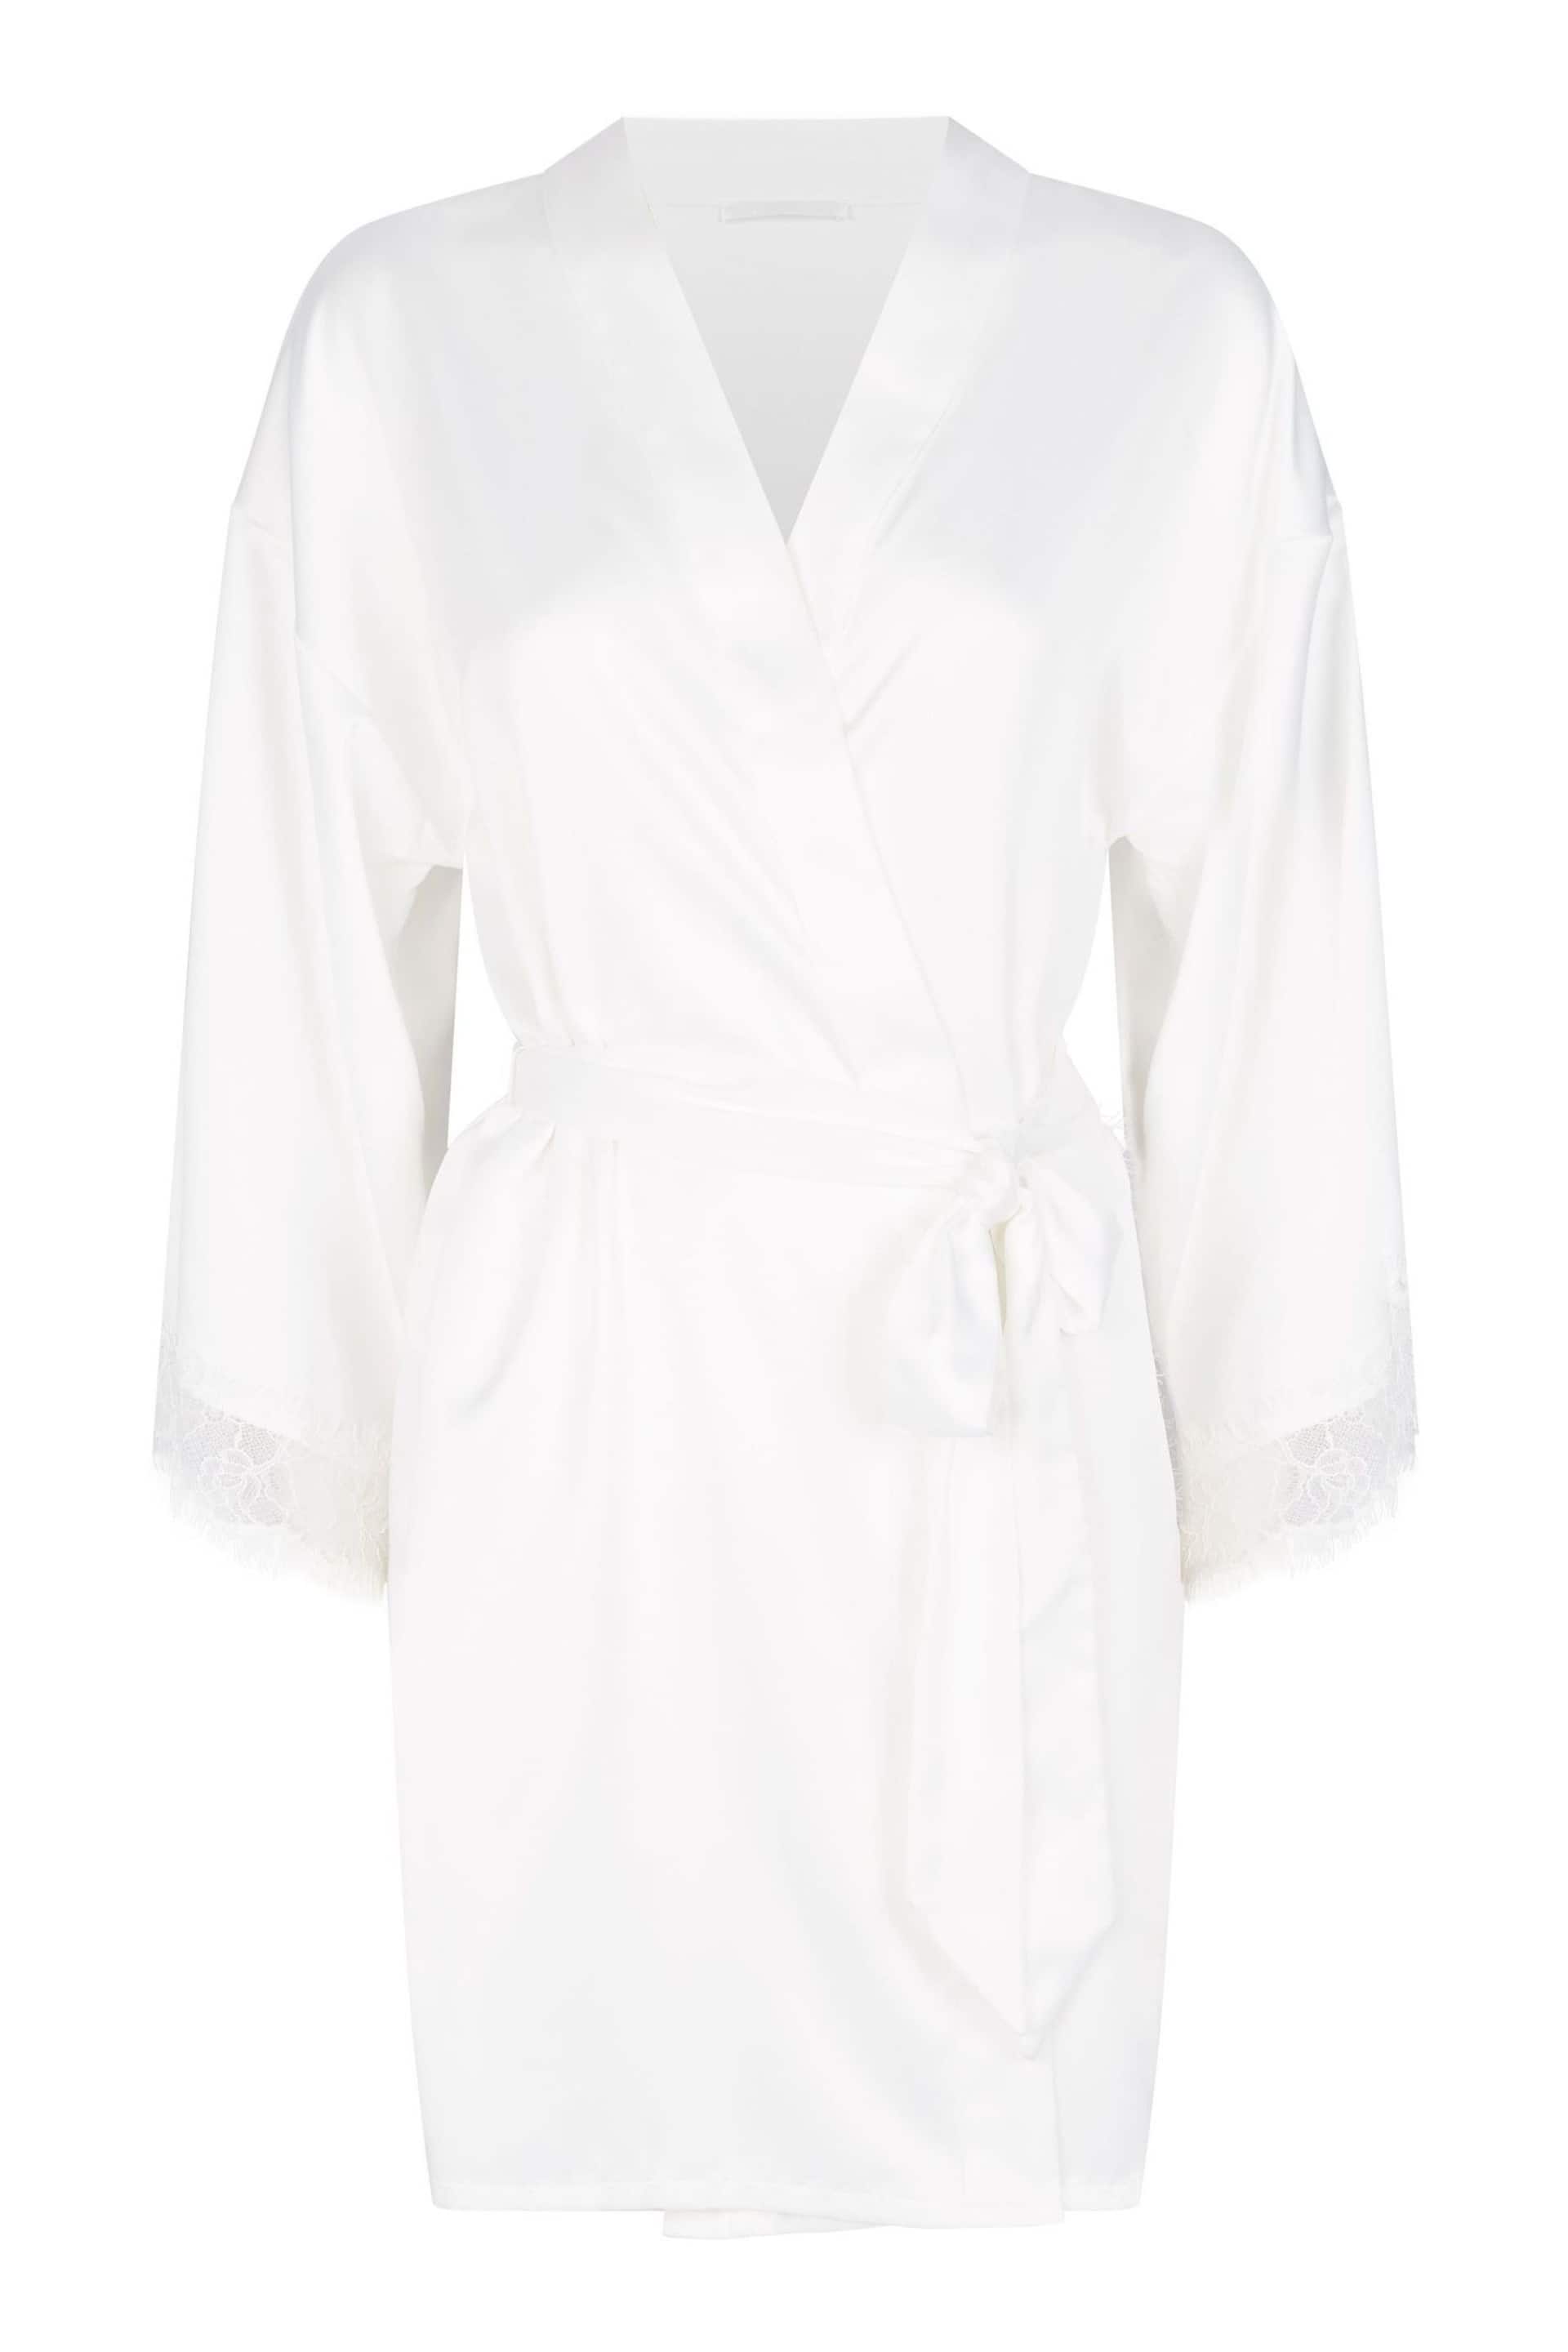 Ann Summers Cherryann Satin Robe Dressing Gown - Image 5 of 5